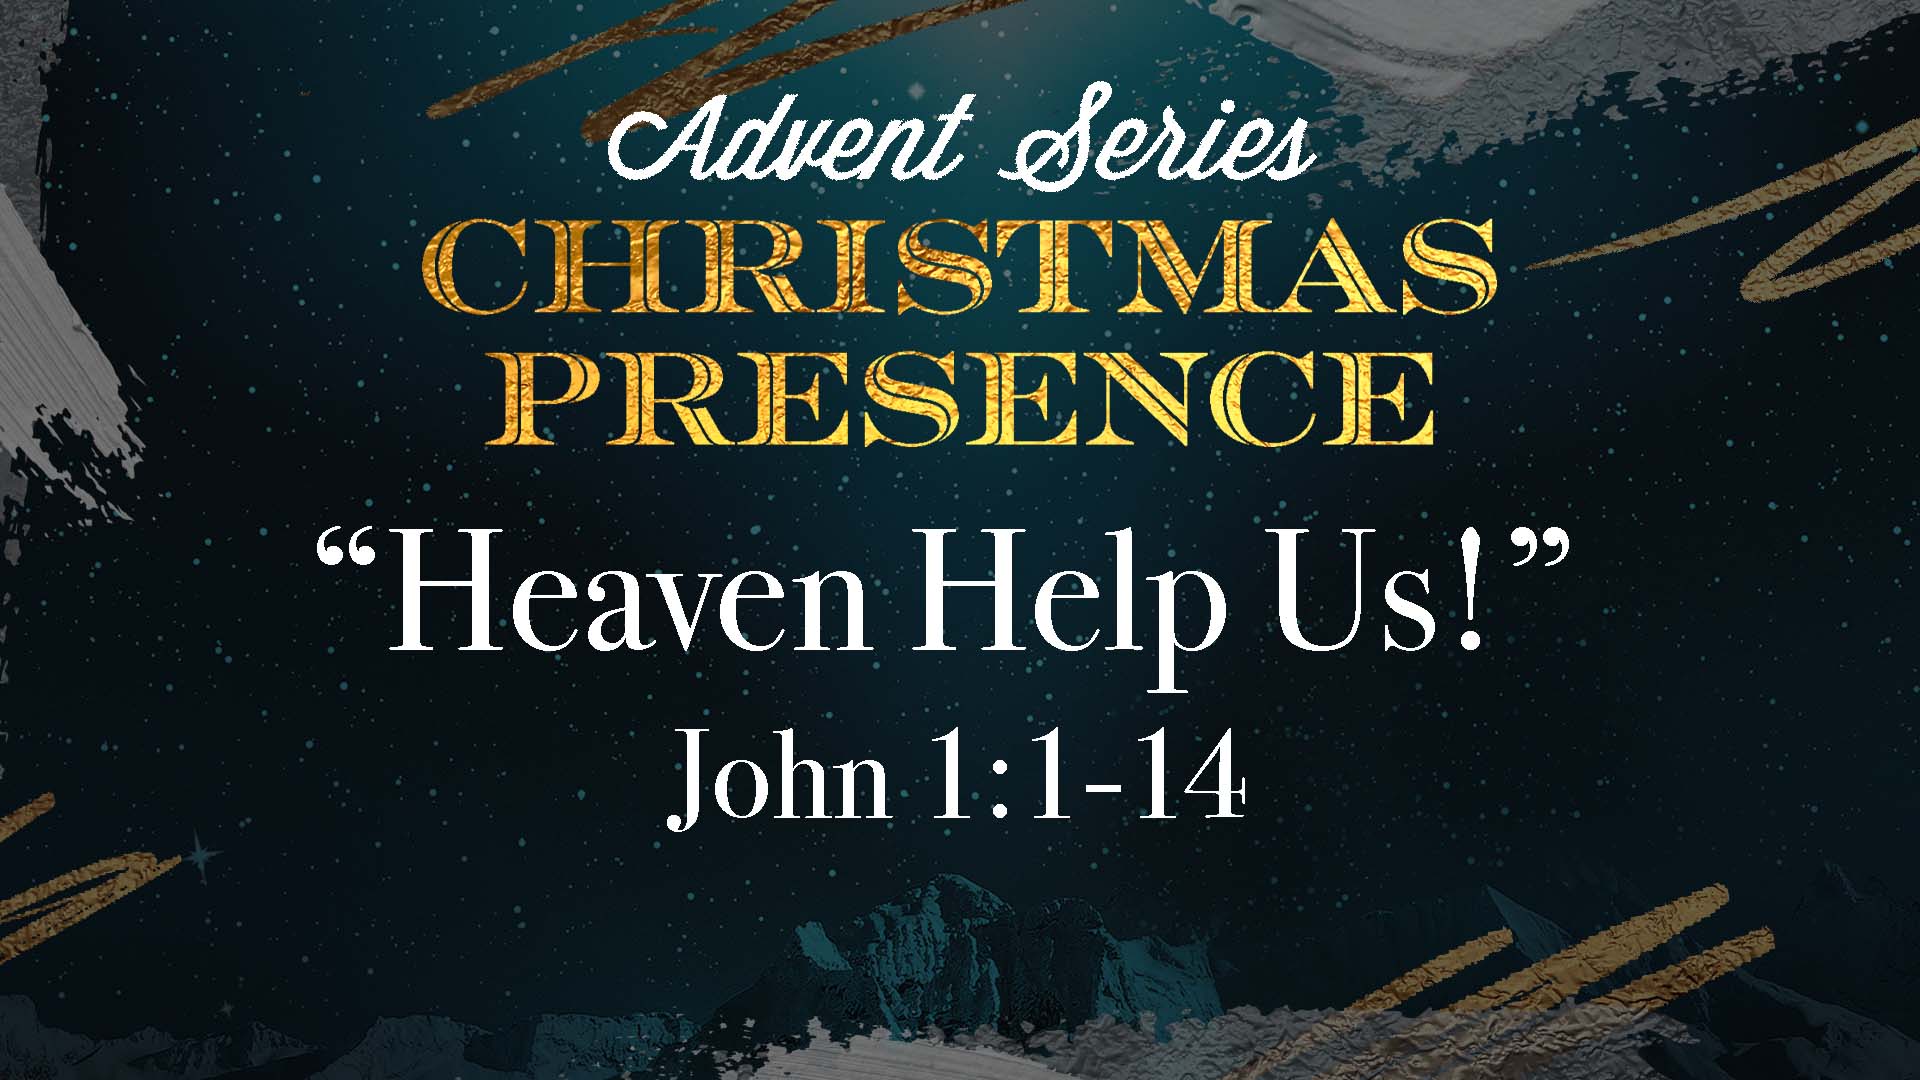 Advent Series: Christmas Presence Part 5 “Heaven Help Us!” (THRIVE)